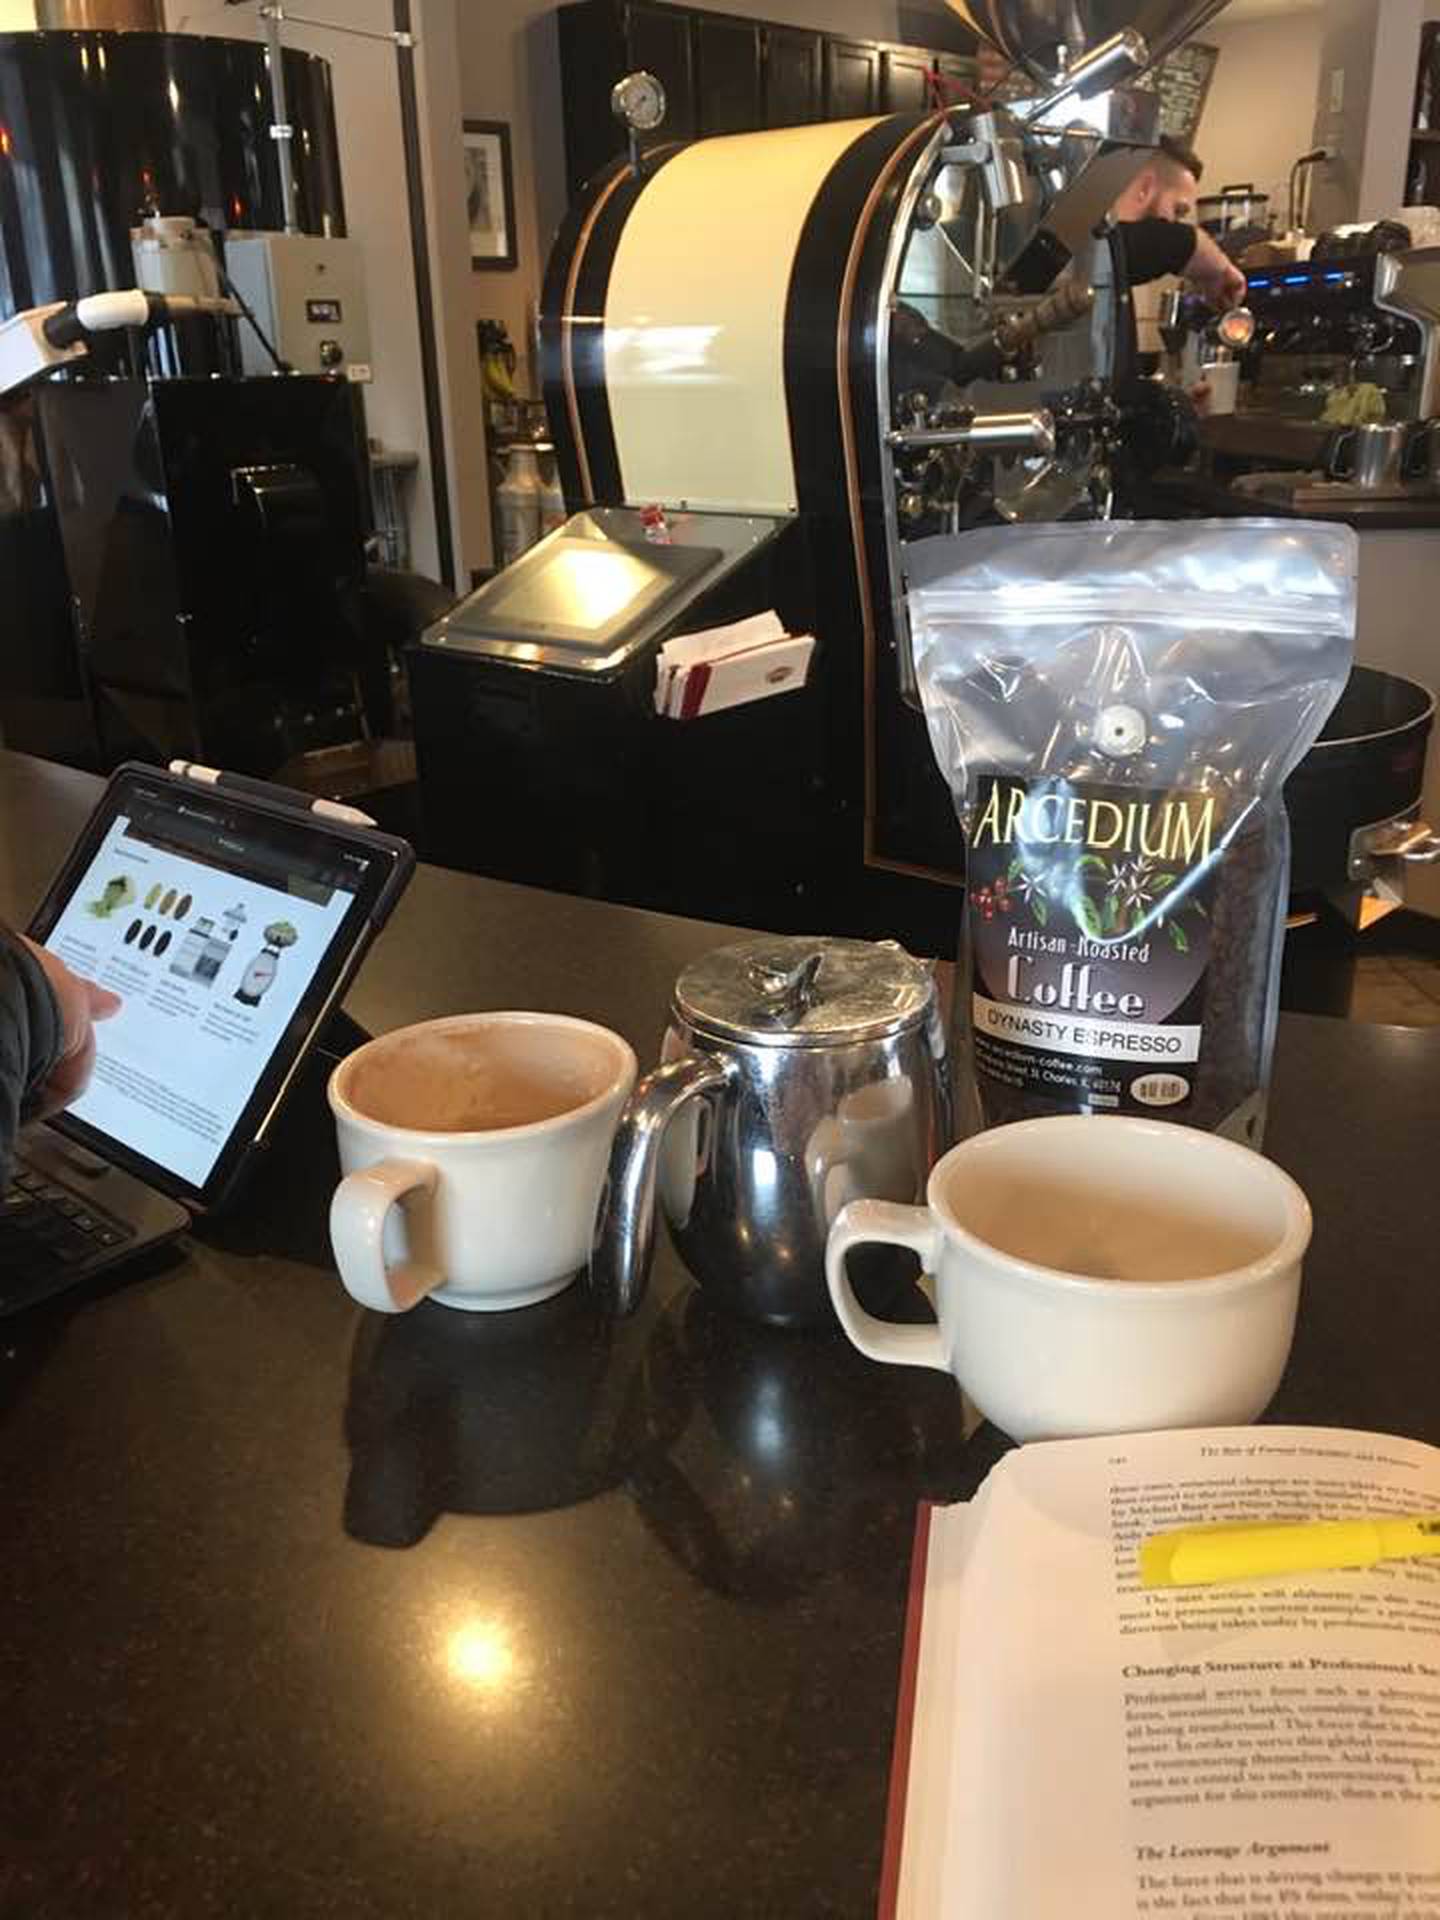 Arcedium Coffeehouse is one of the finest coffee shops in Kane County. (Arcedium Coffeehouse via Facebook)